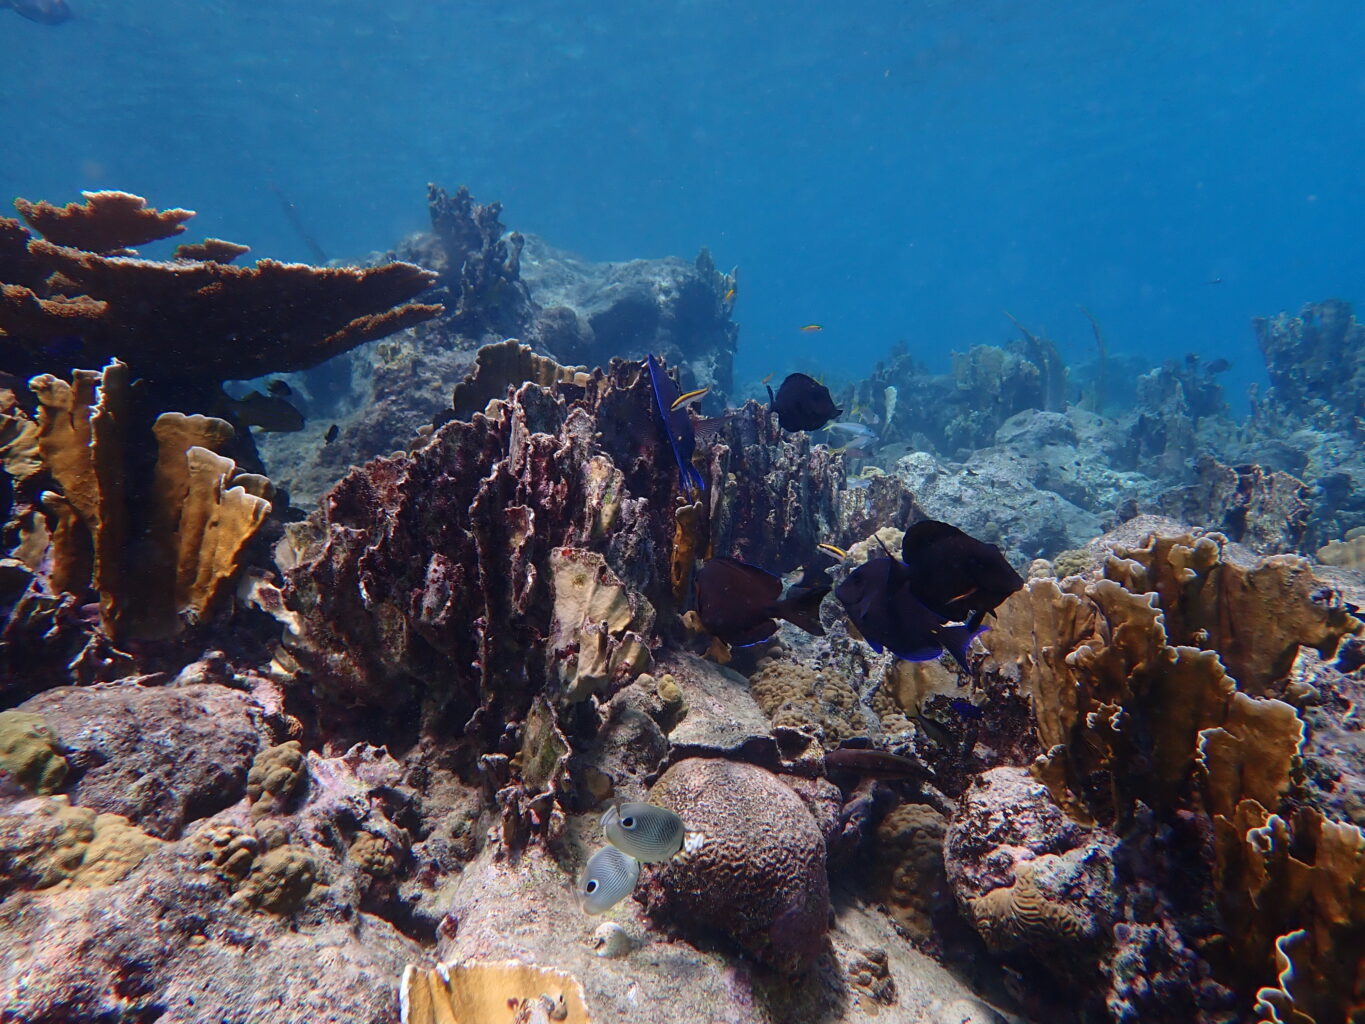 Coral growth on the ocean floor